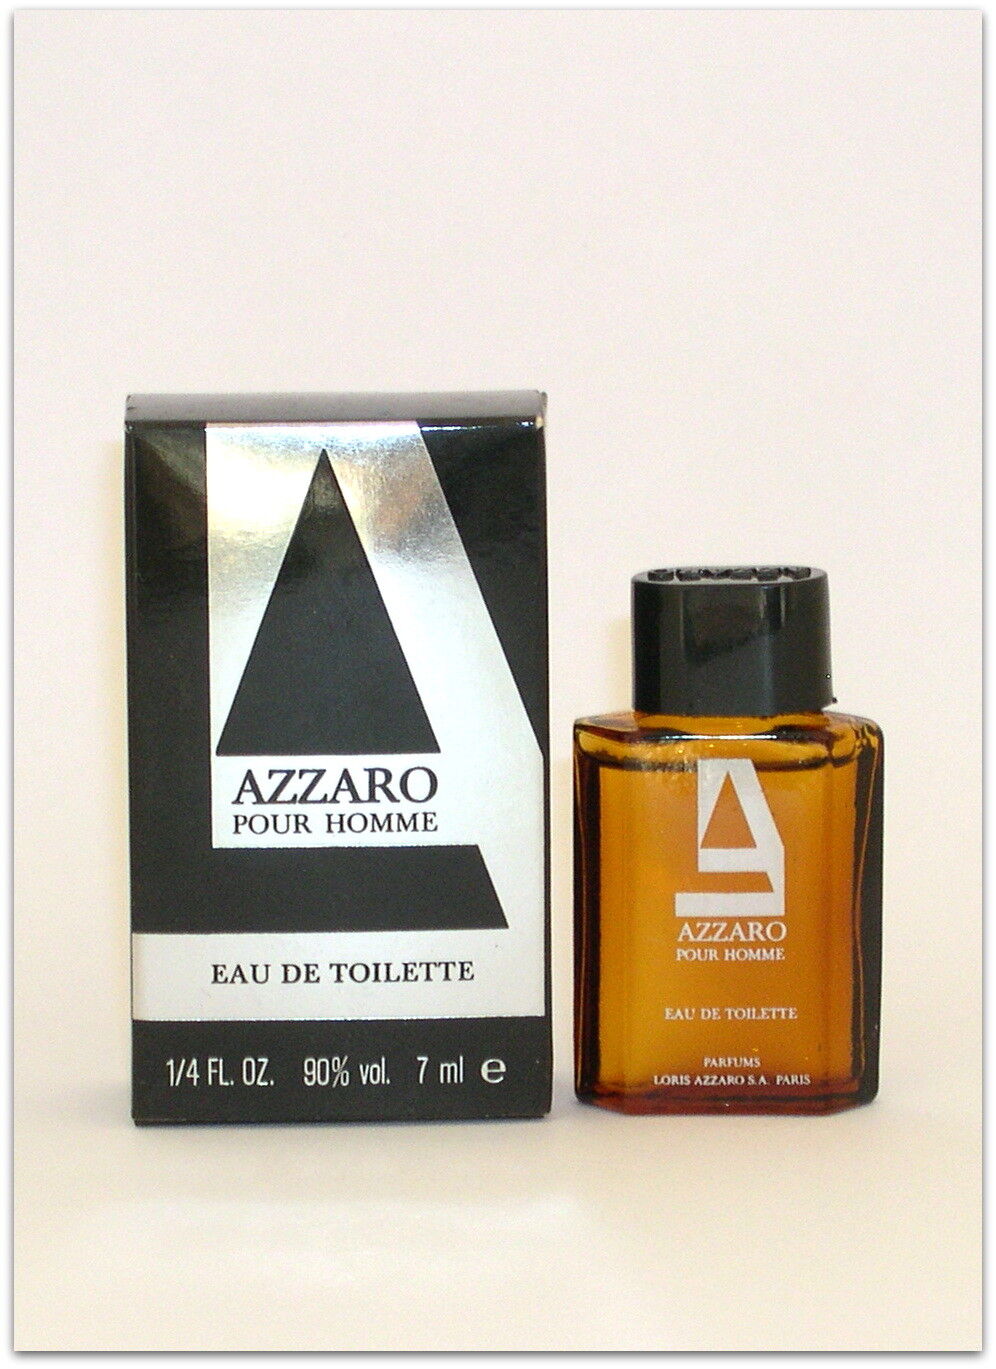 Azzaro Men\'s Eau de toilette 7 ml. 1/4 fl oz mini perfume for collection.